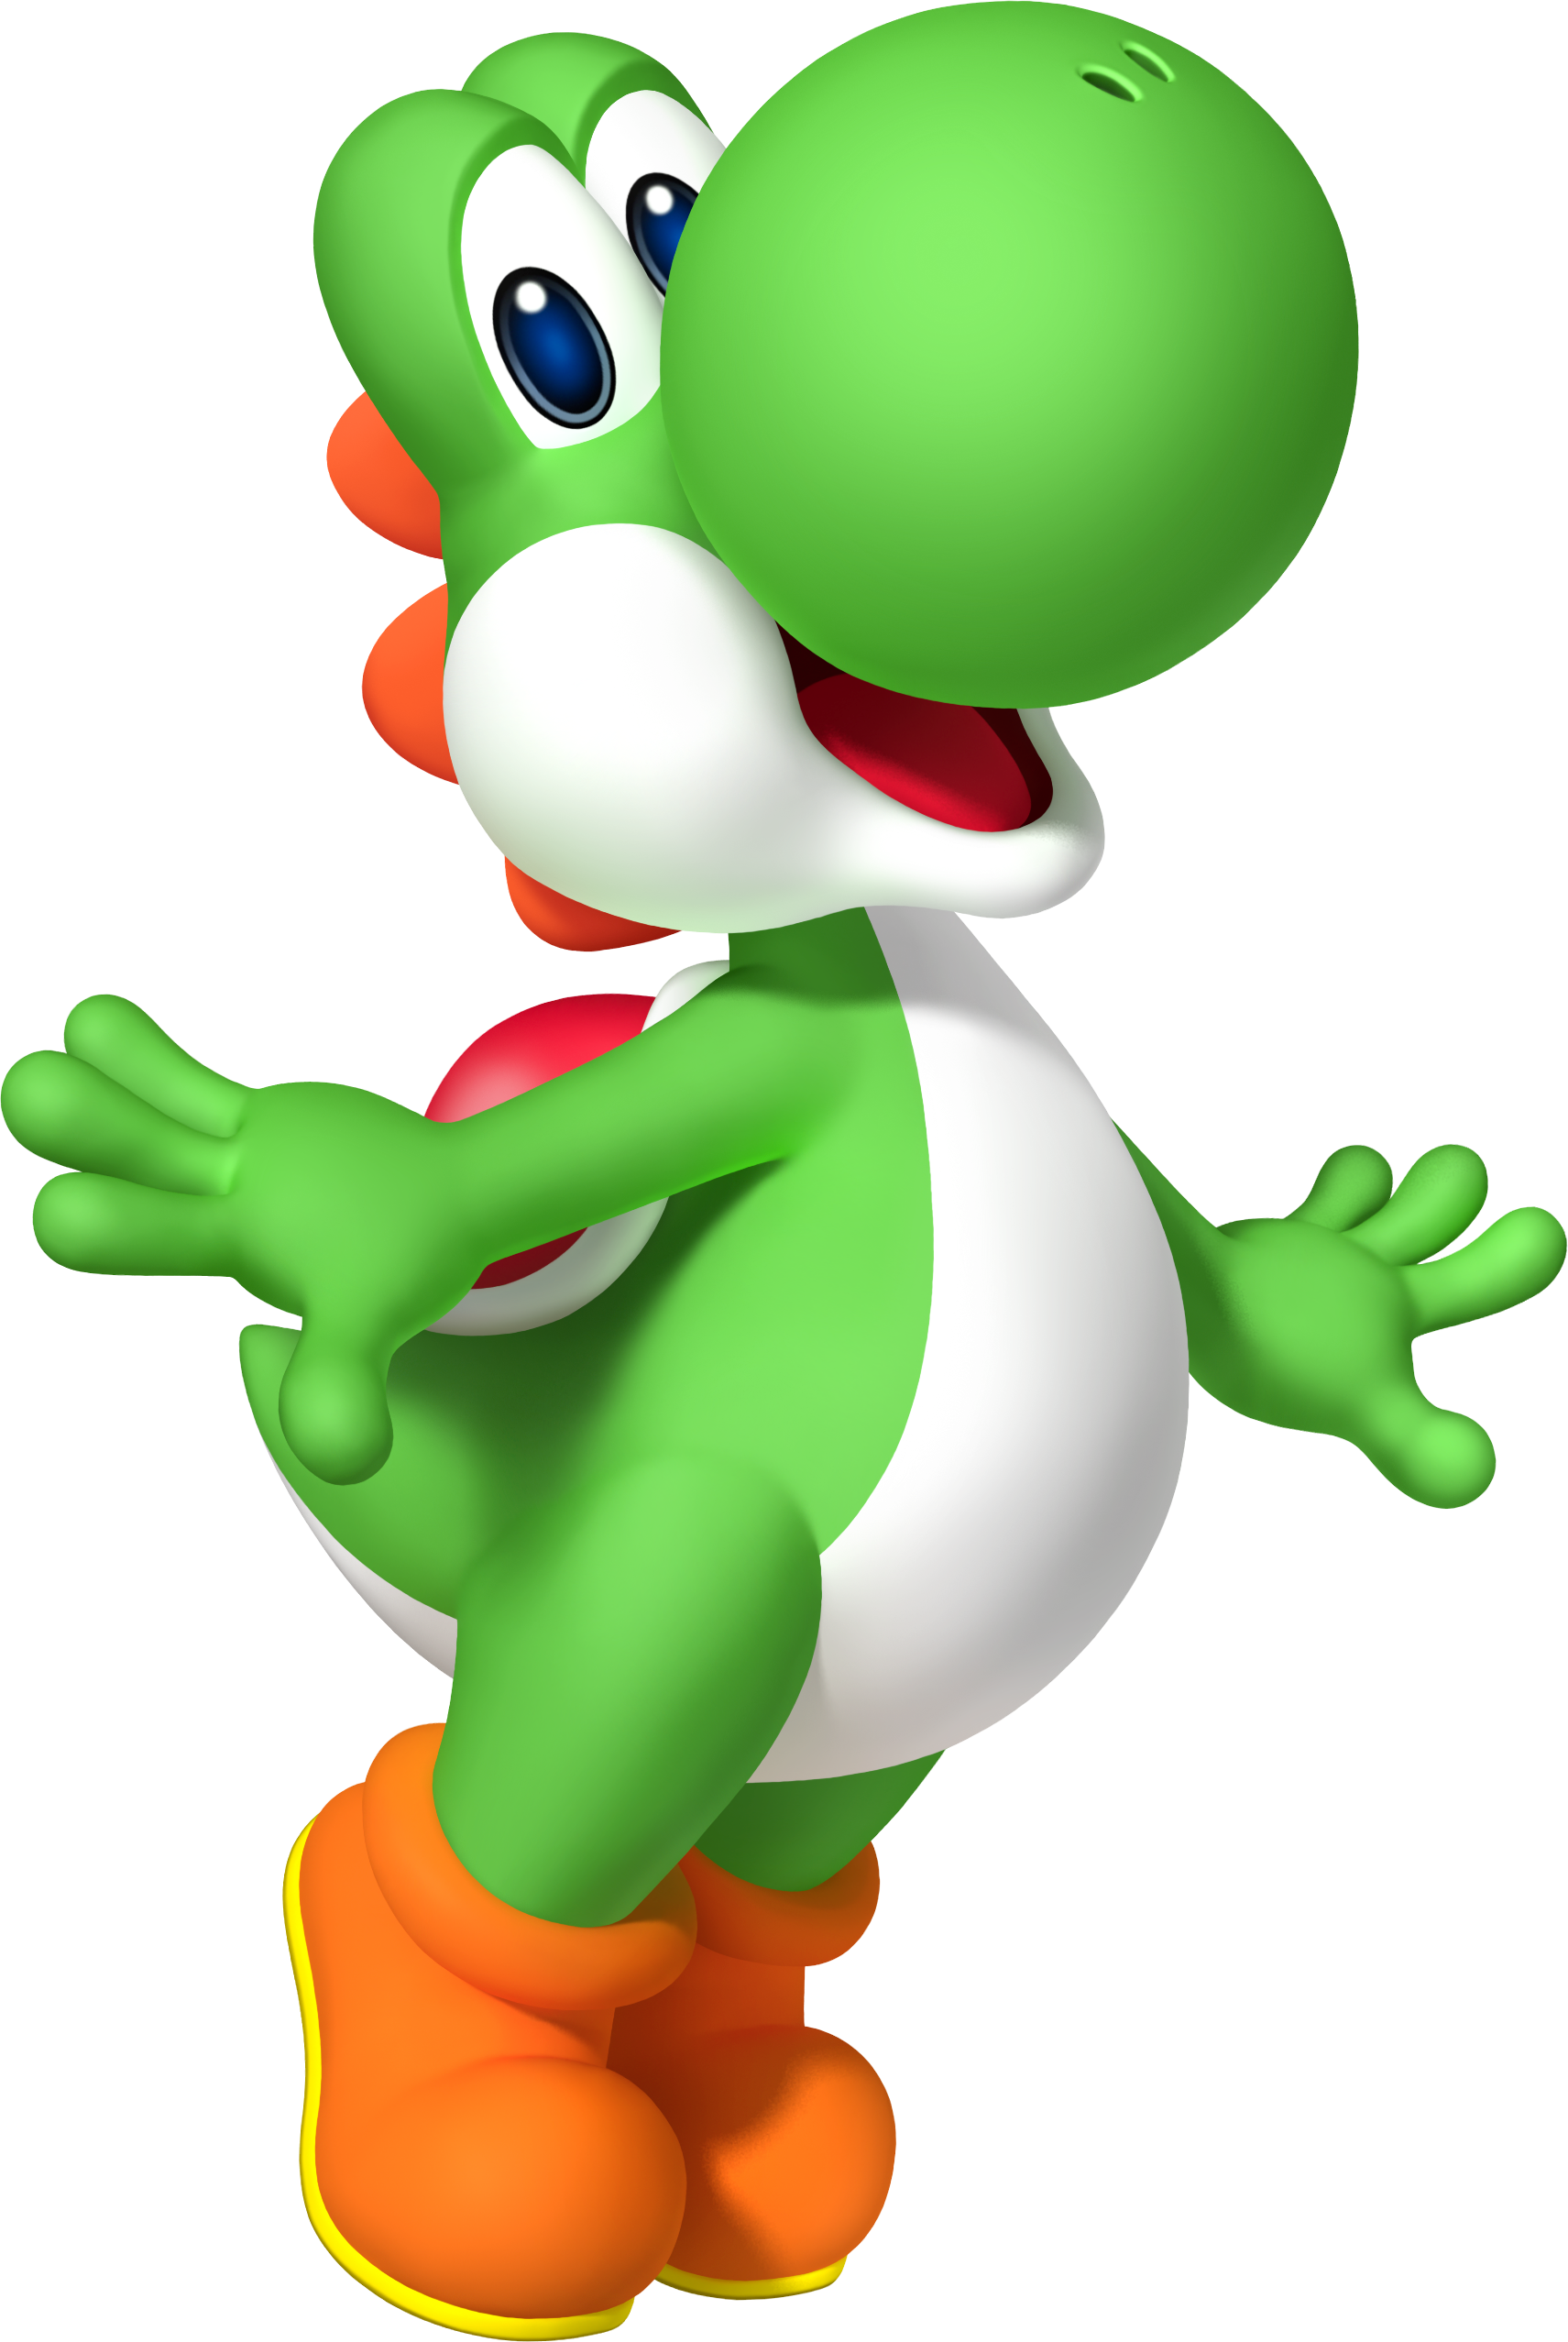 Yoshi (Super Mario character) | Ultimate Pop Culture Wiki | FANDOM powered by Wikia1711 x 2555